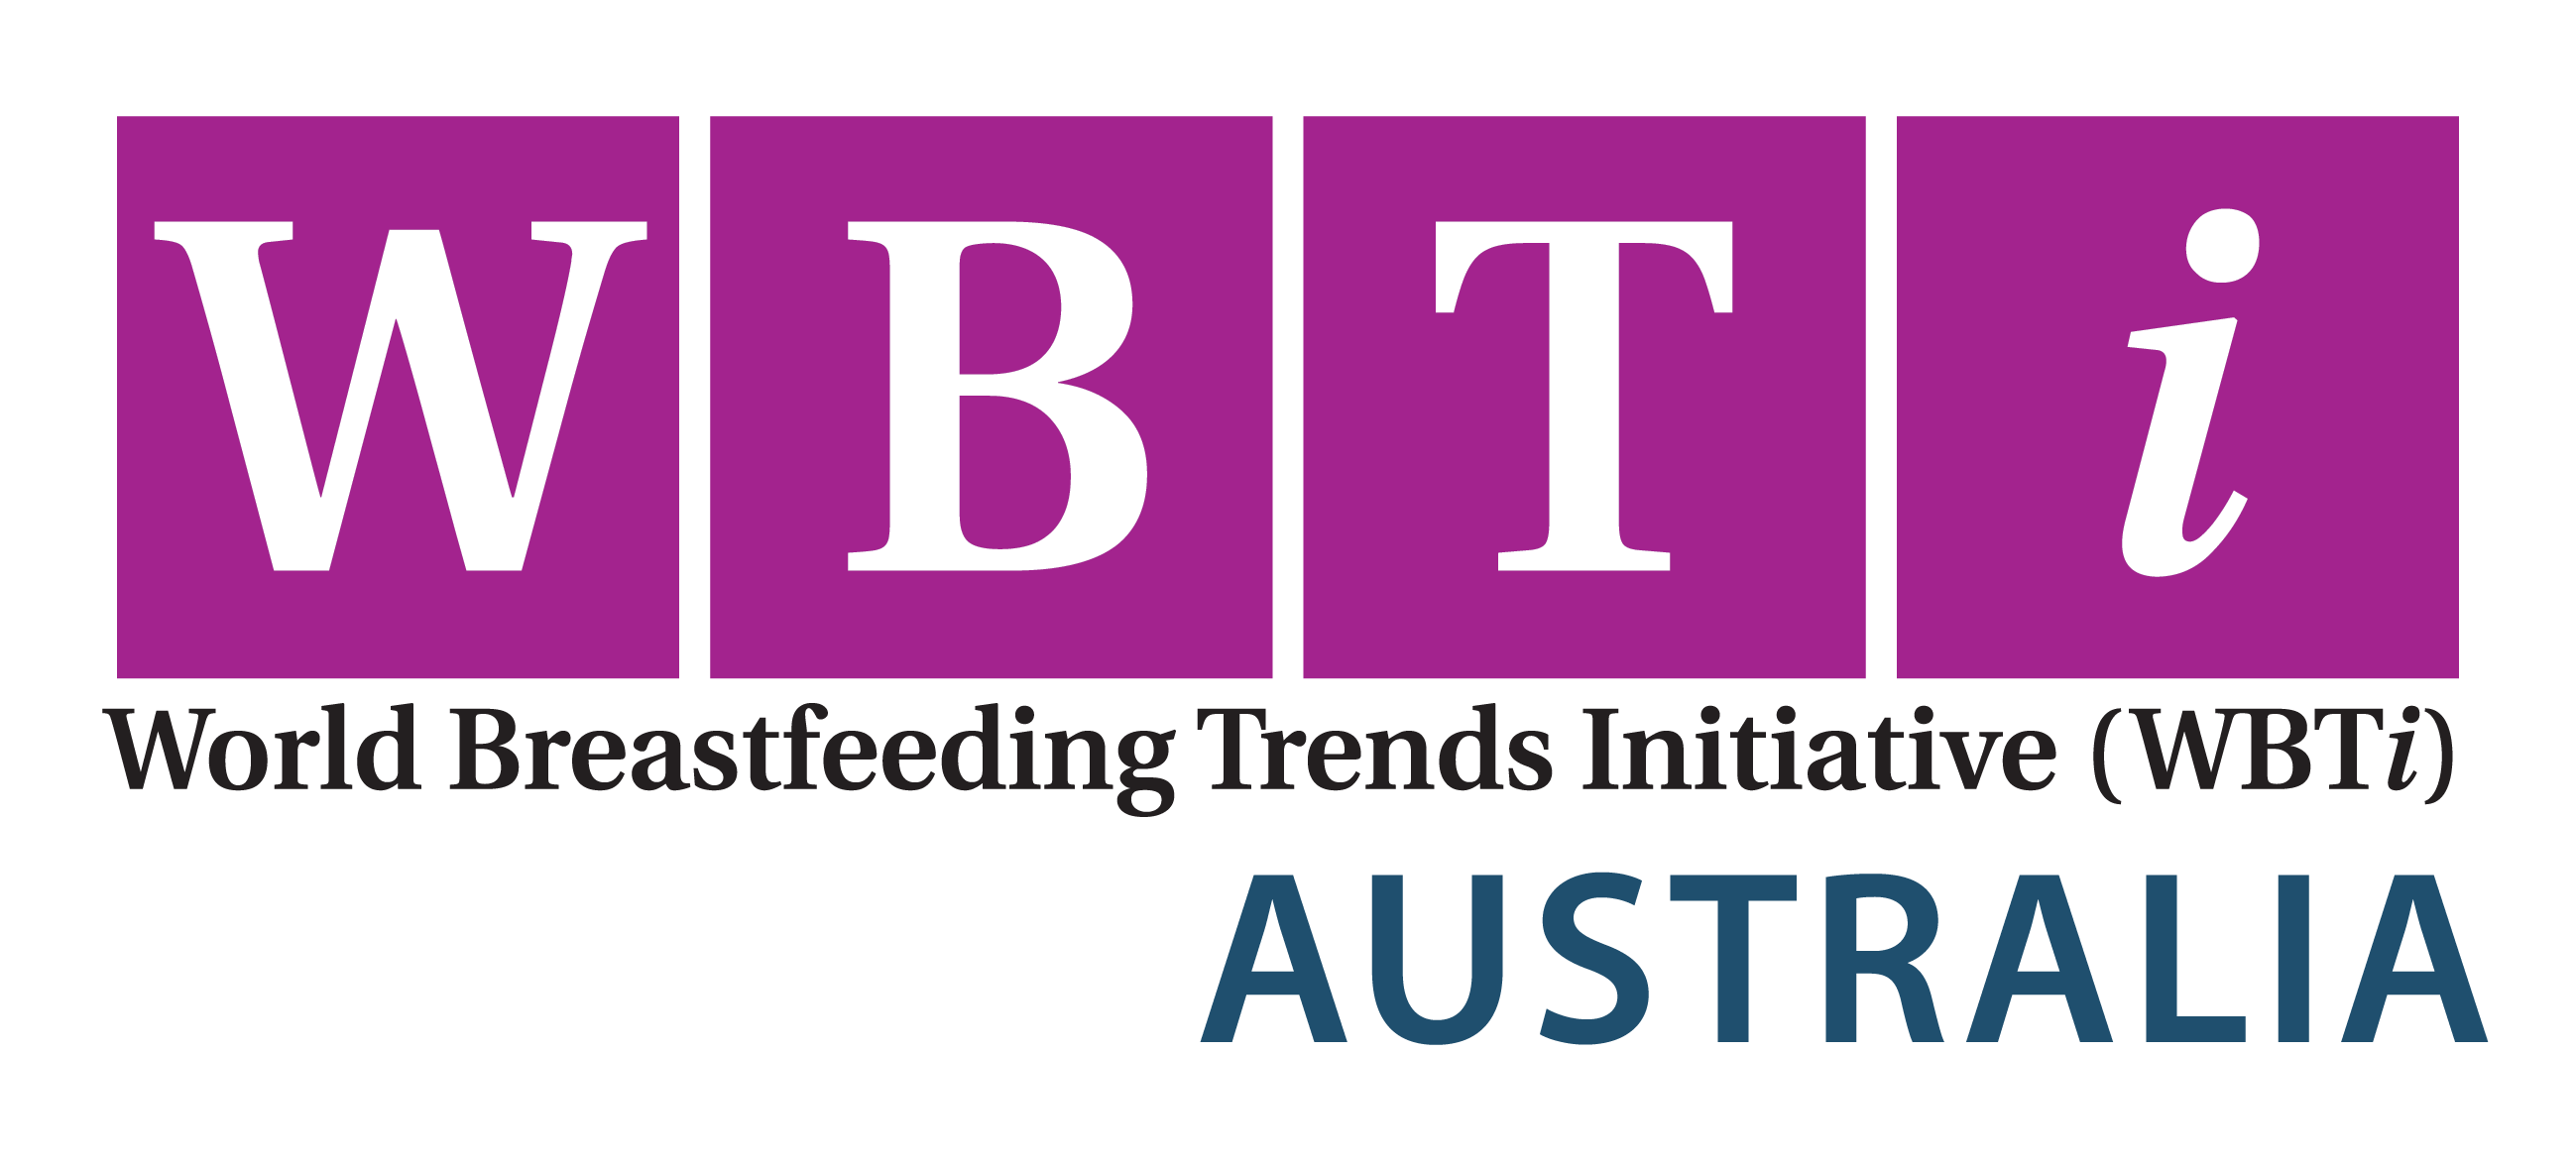 World Breastfeeding Trends Initiative Australia